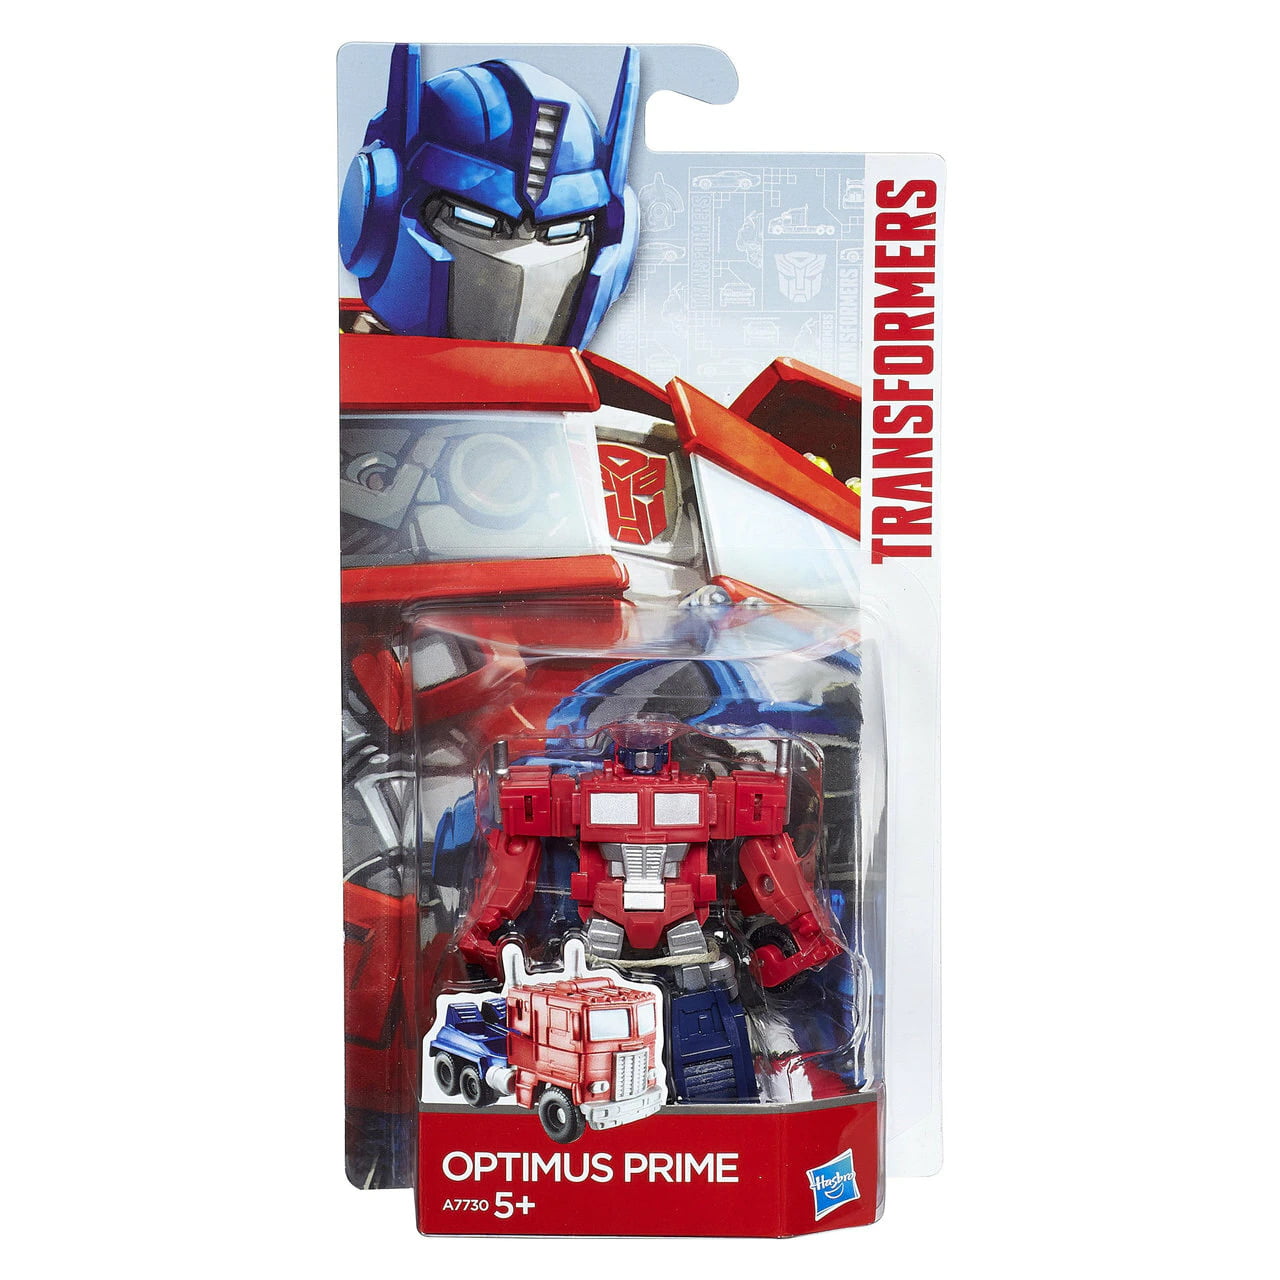 Details about   Optimus Prime Figure  2009 Hasboro Burger King Transformers ToyAutobots 